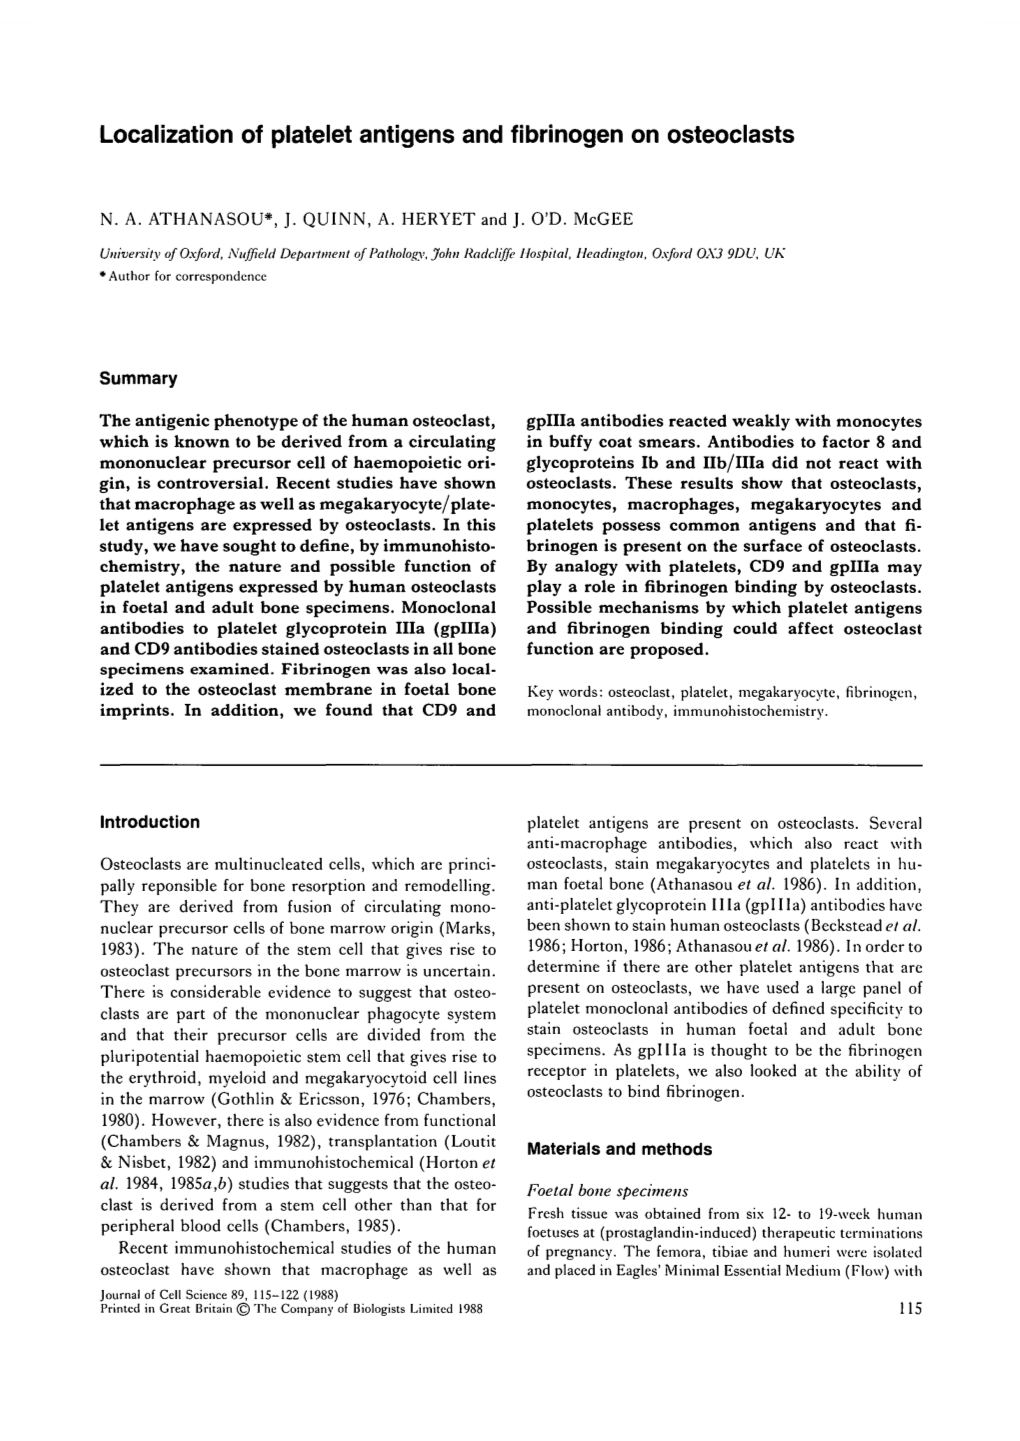 Localization of Platelet Antigens and Fibrinogen on Osteoclasts